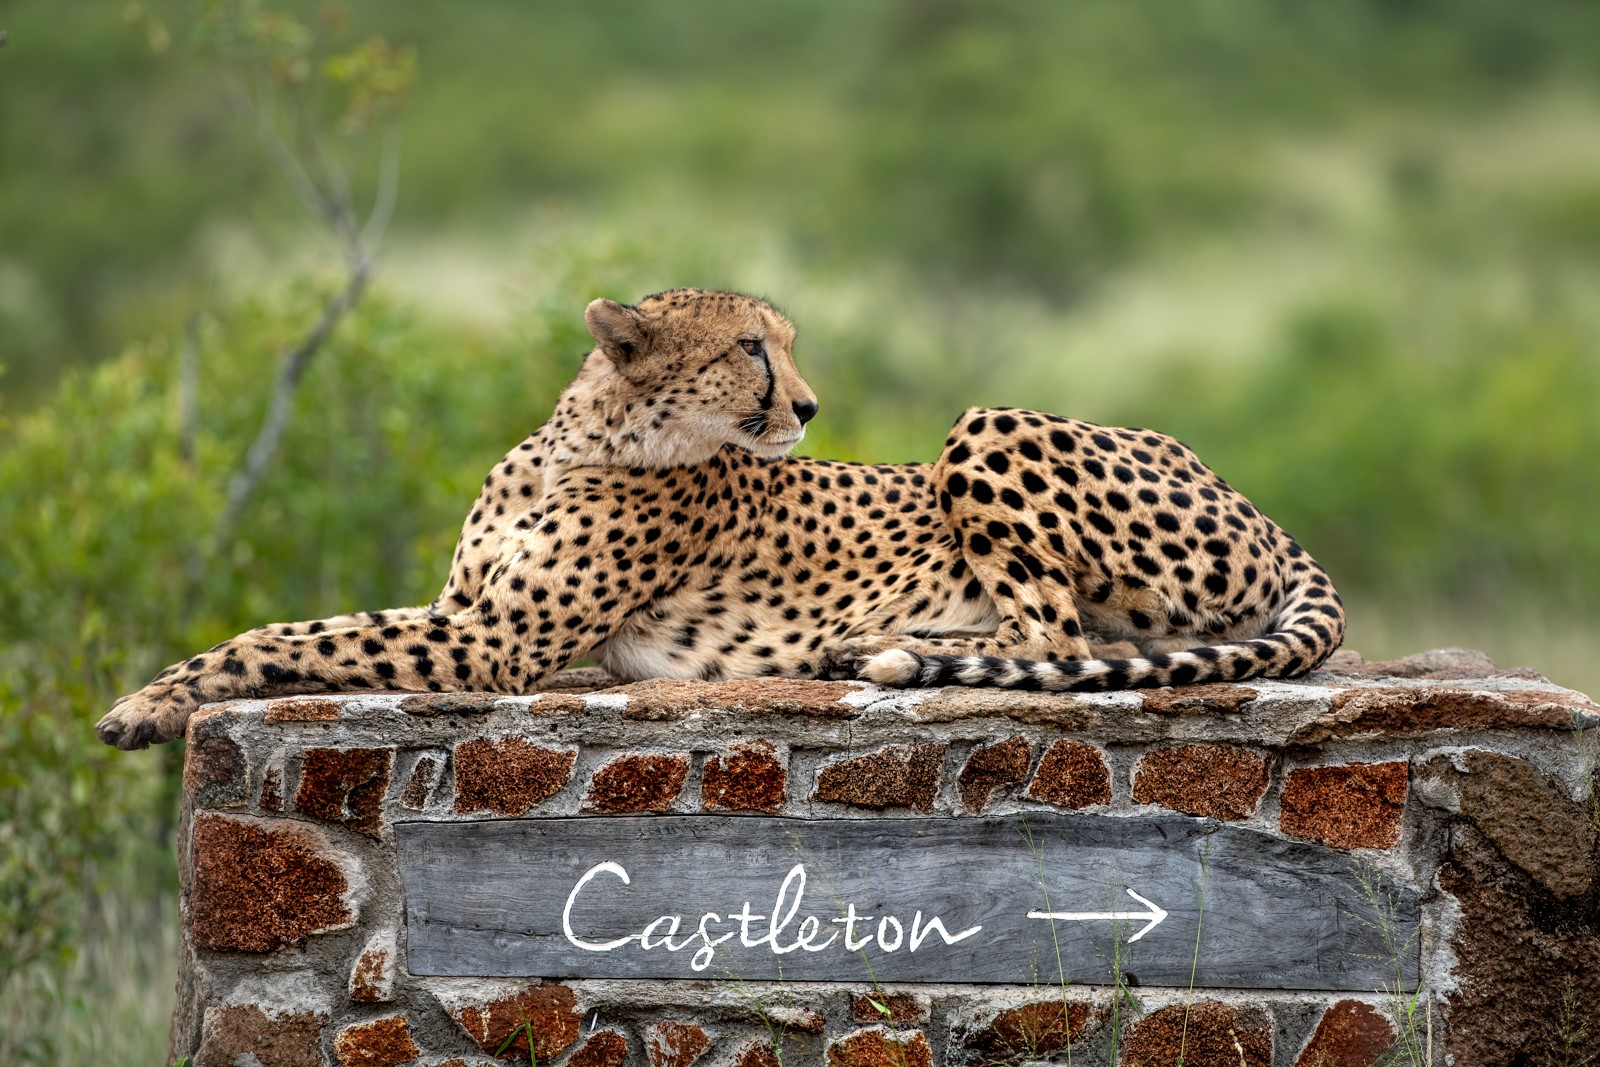 Castleton with cheetah